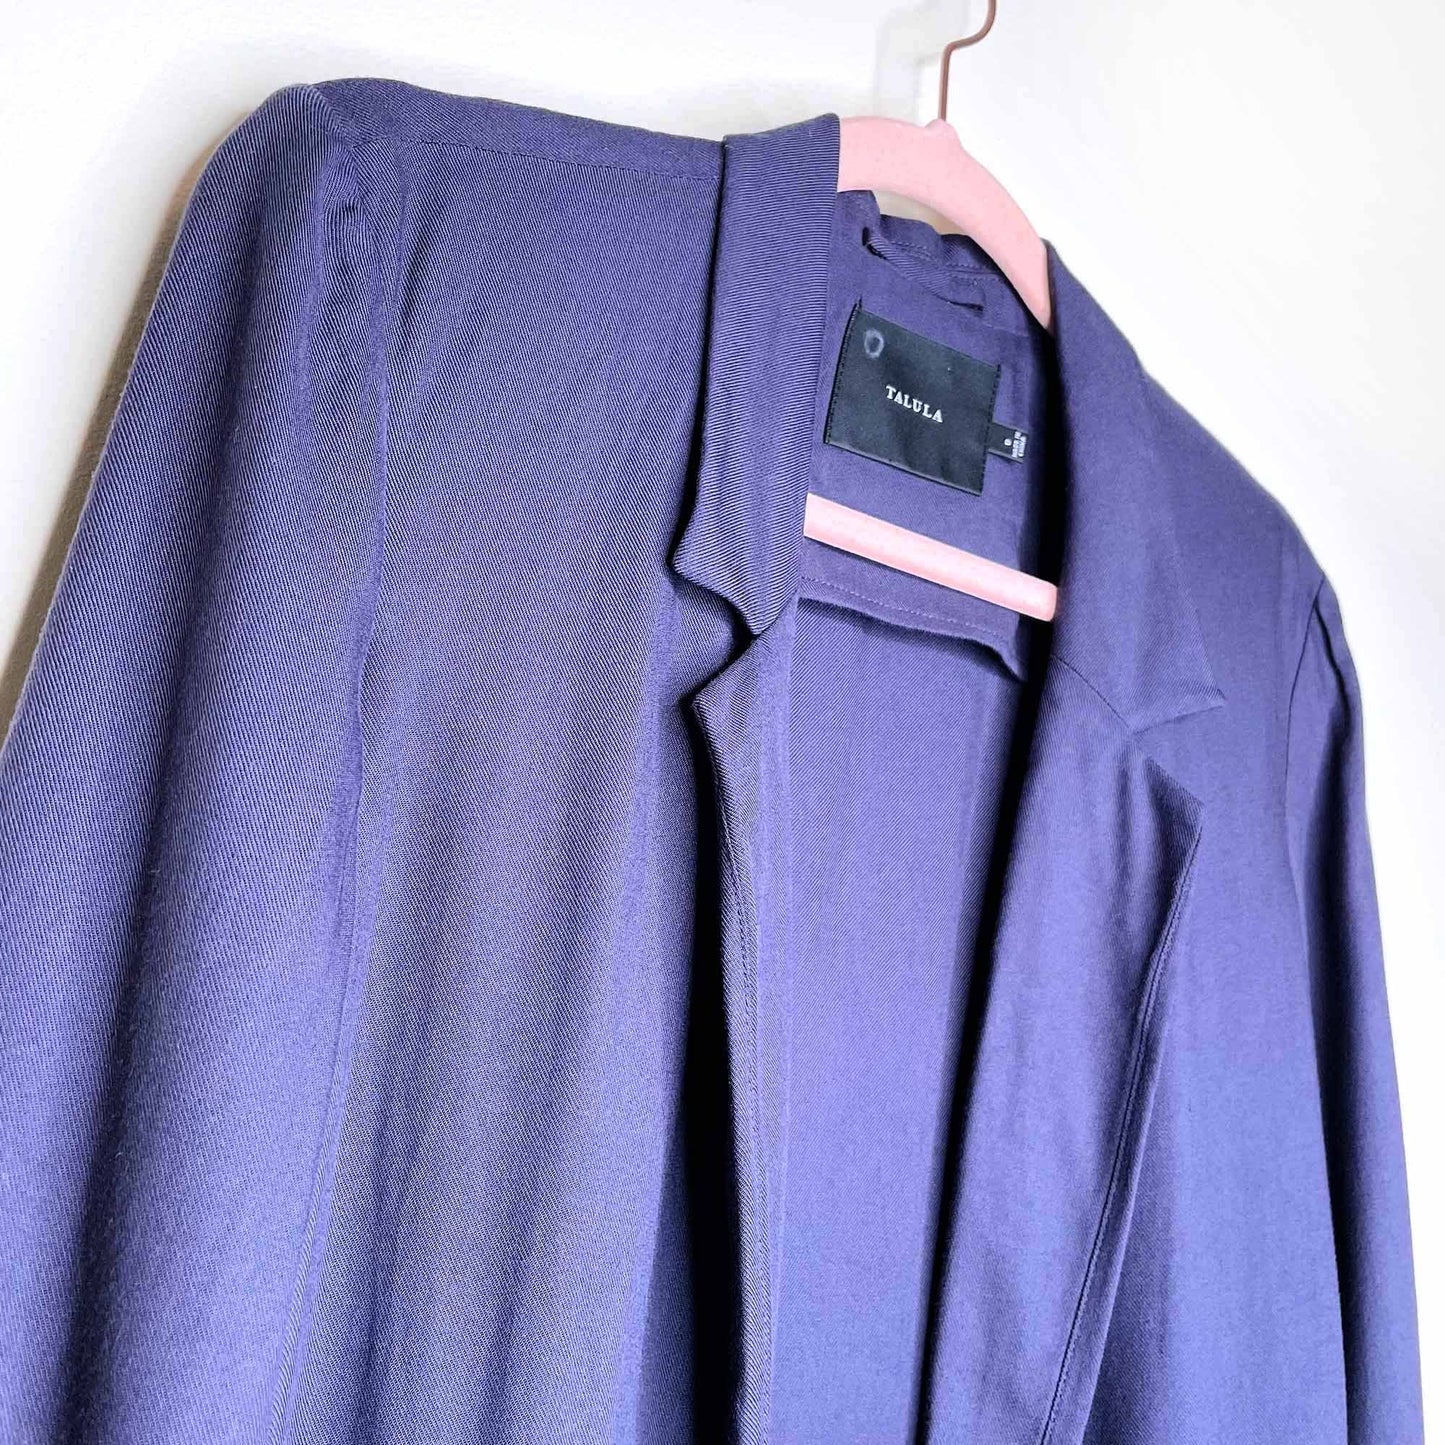 talula kent open blazer - purpley blue - size 0